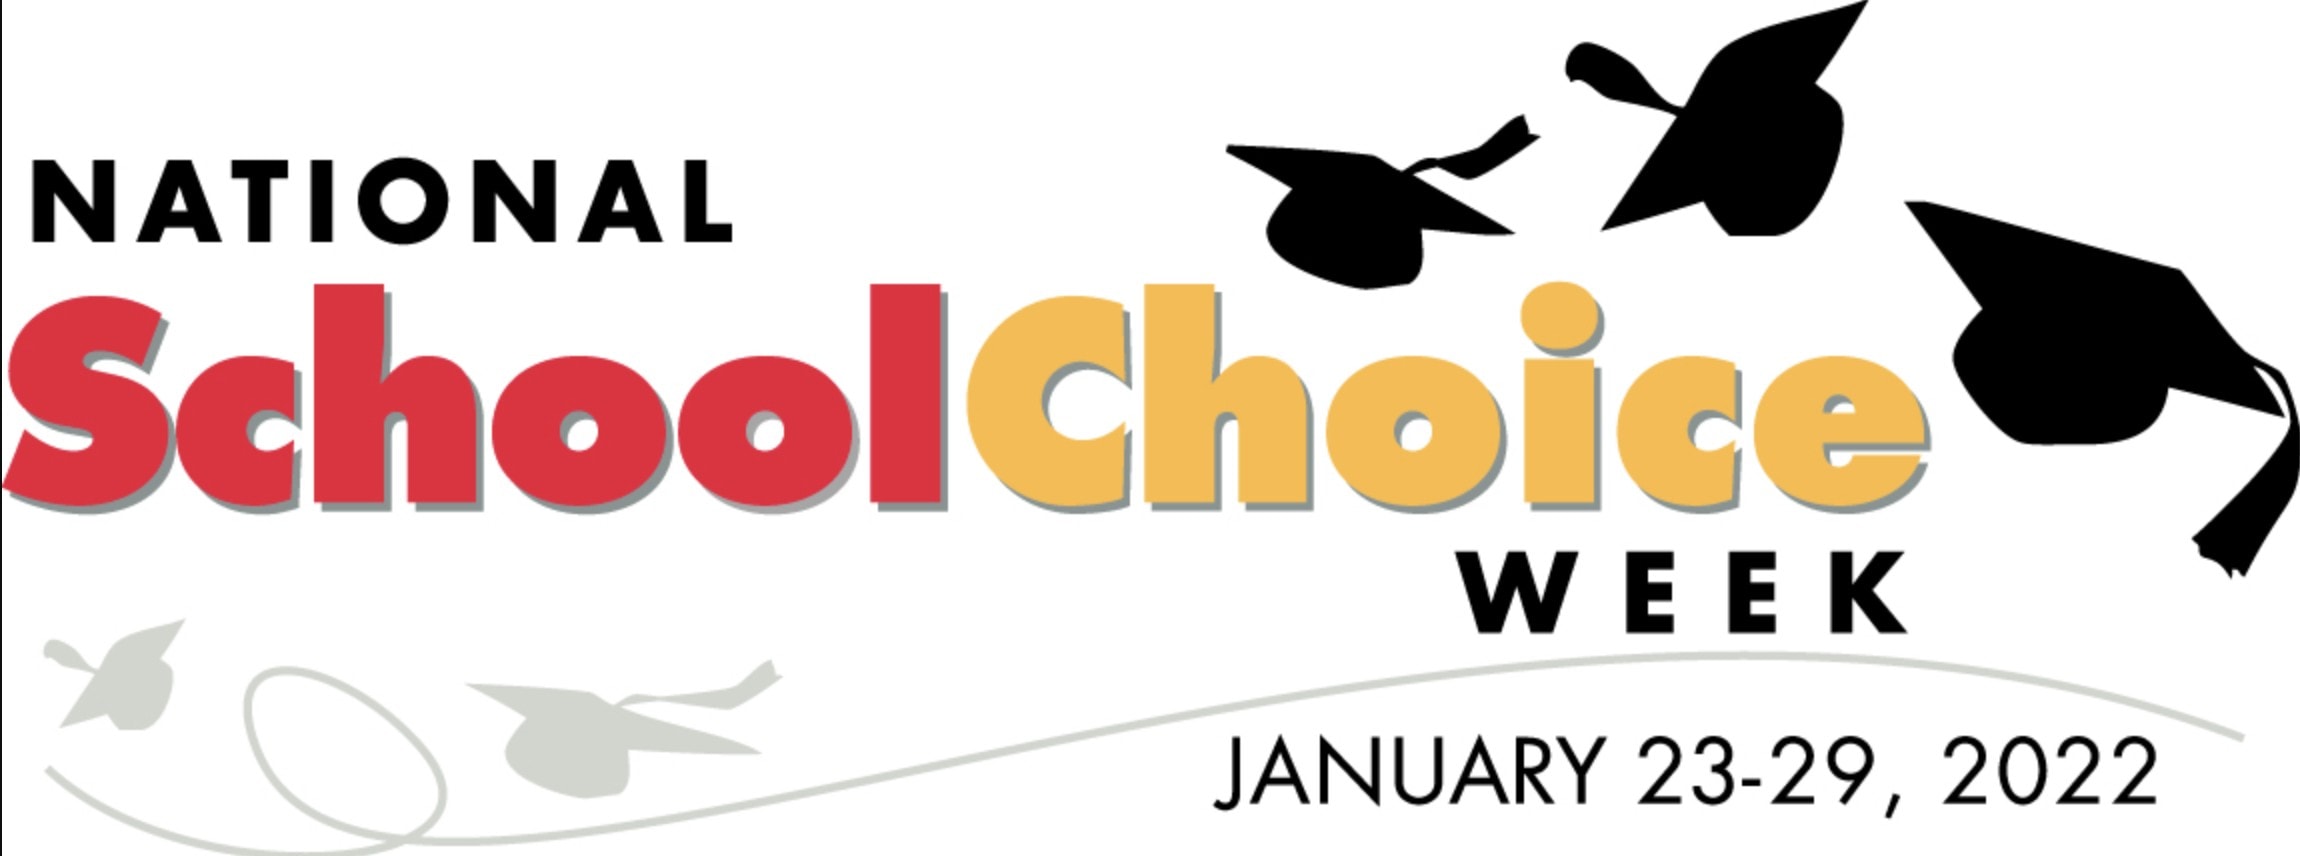 National School Choice week 2022